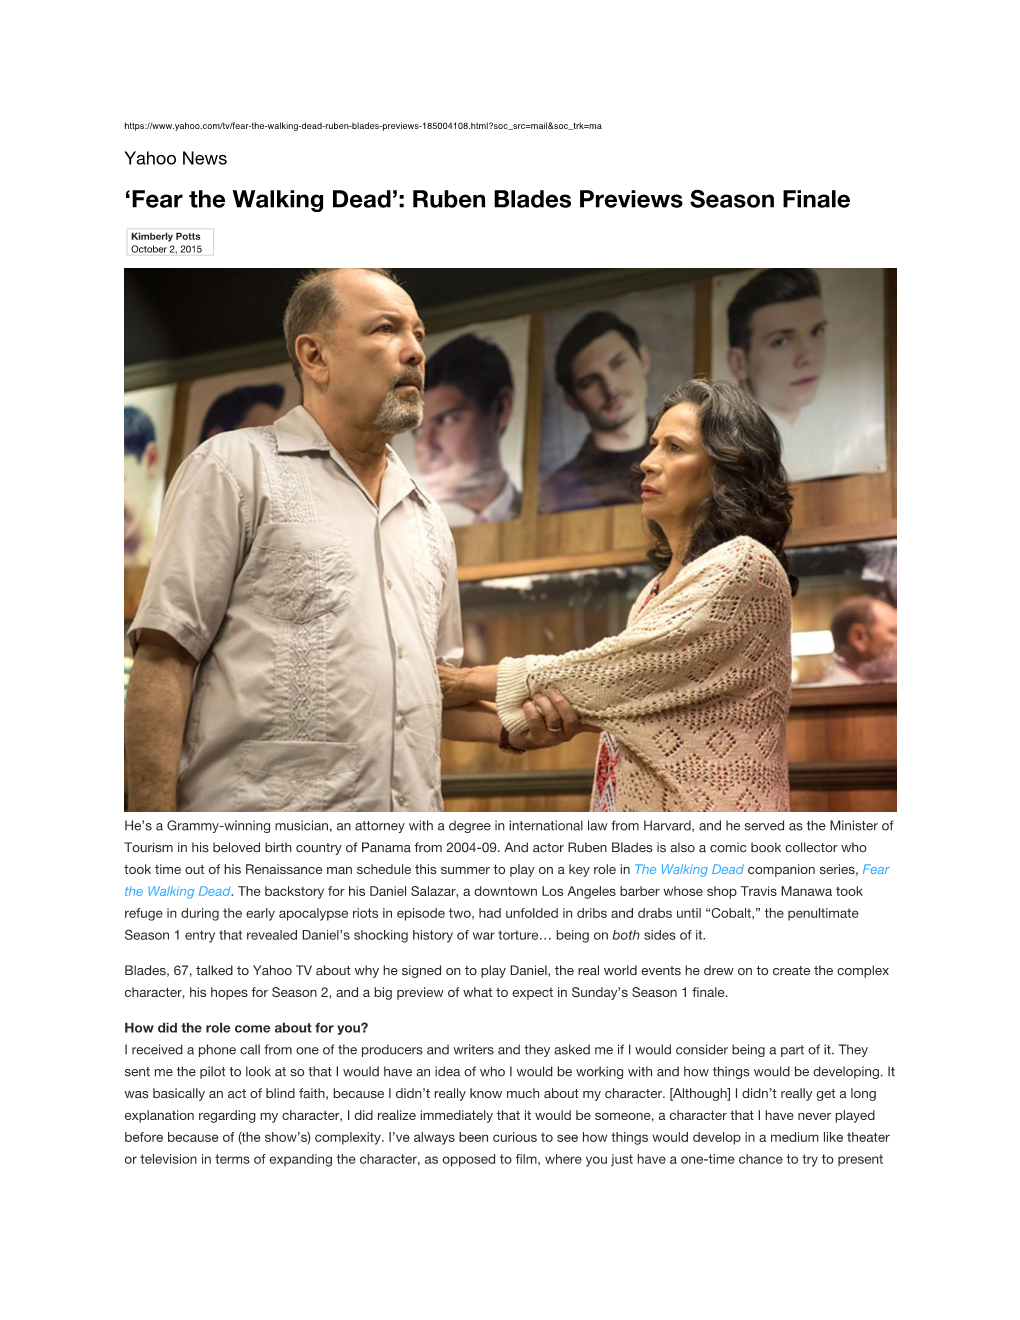 'Fear the Walking Dead': Ruben Blades Previews